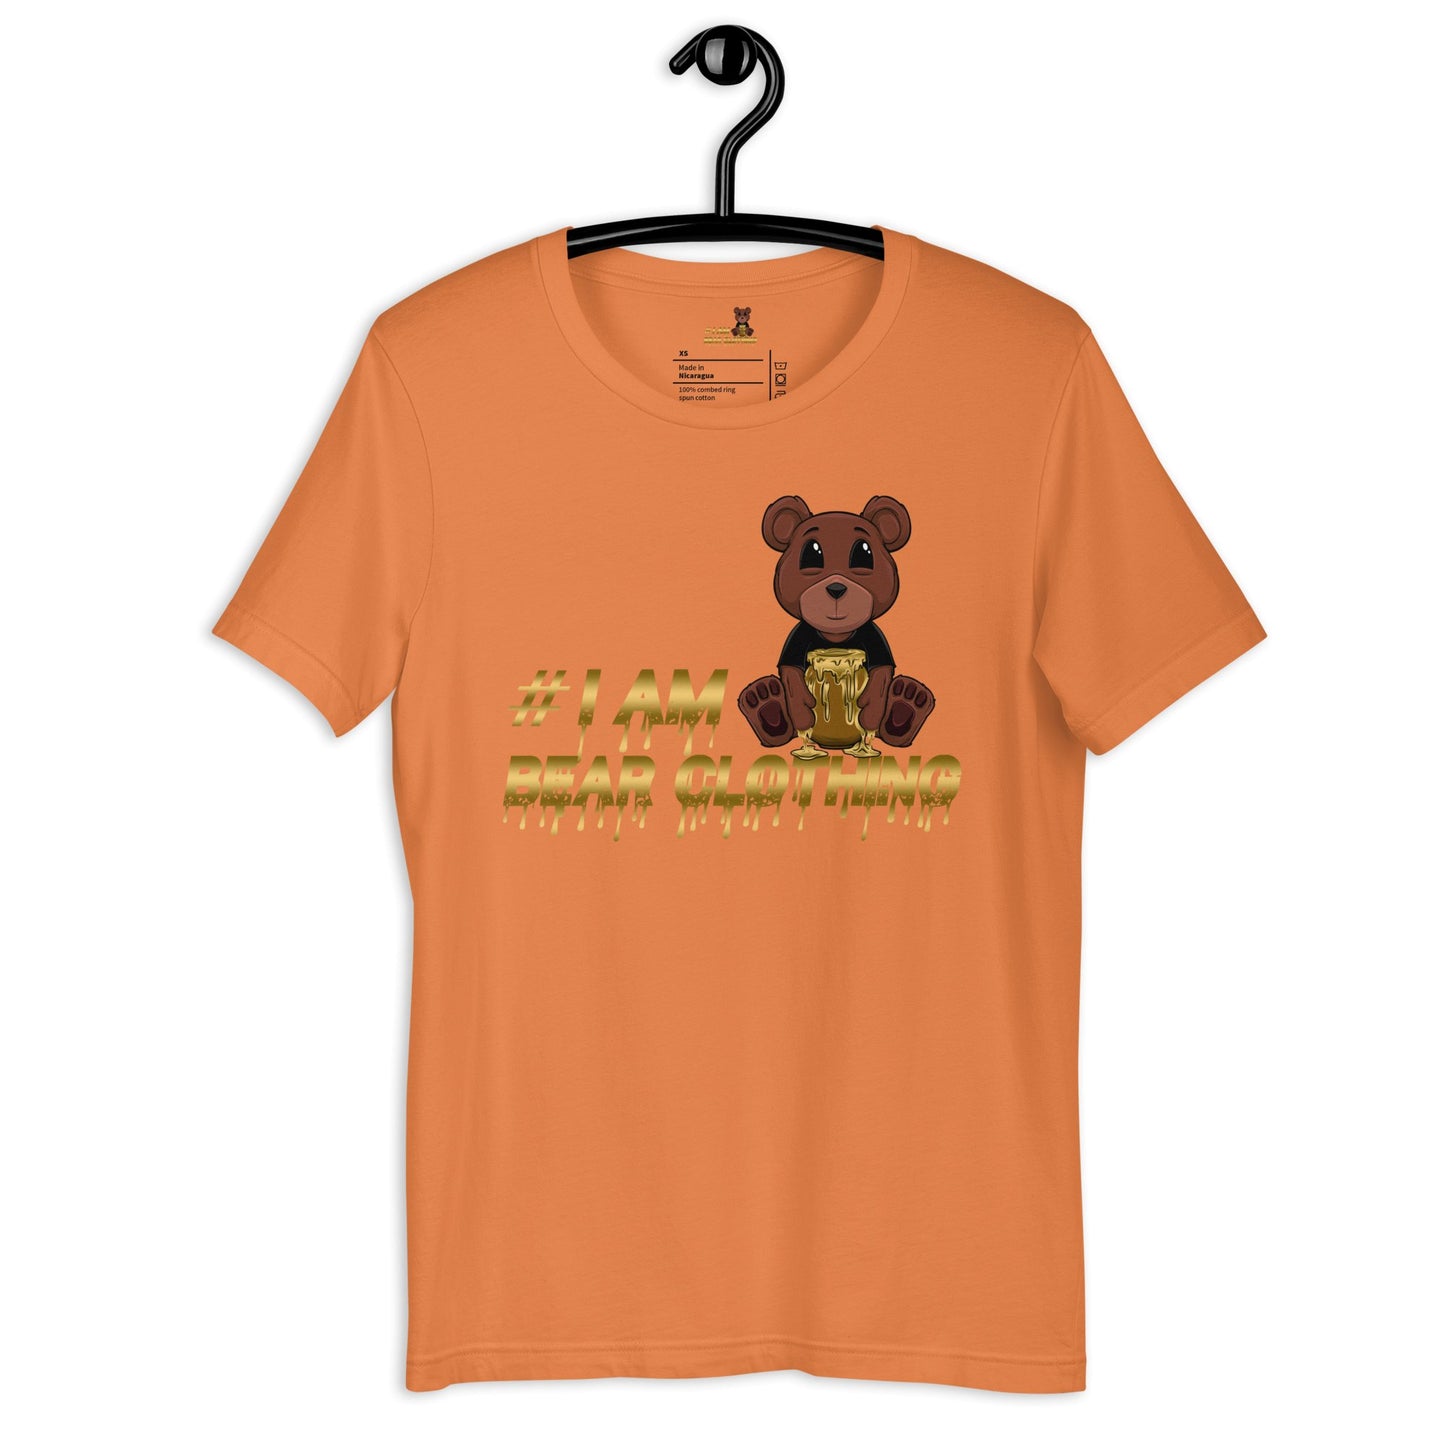 Honey Bear I Am Bear Clothing Tee - Bearclothing